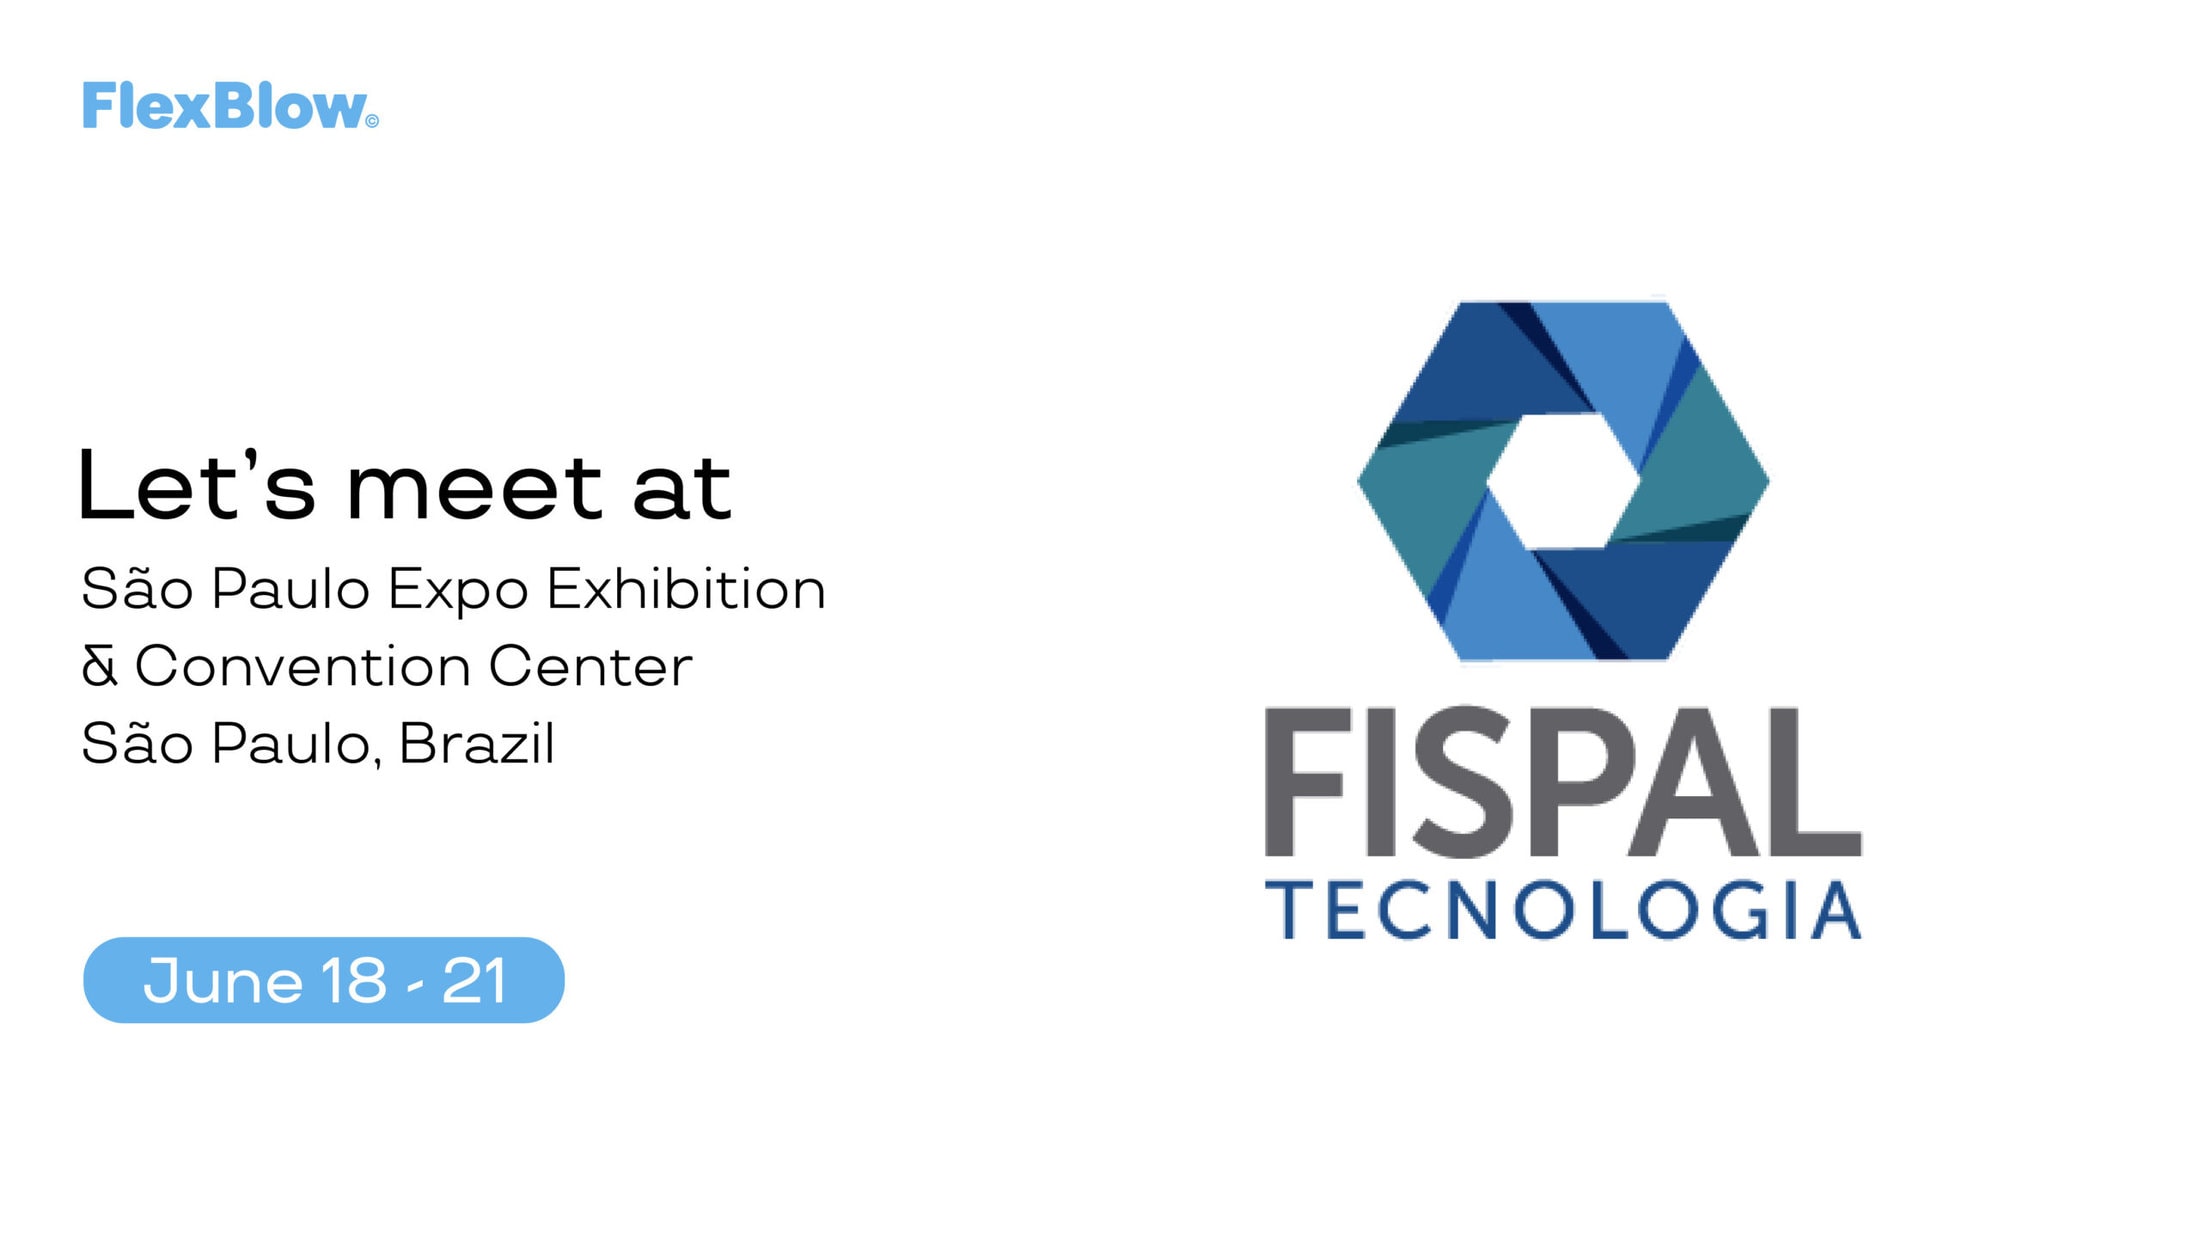 Let's meet at Fispal Tecnologia 2024 FlexBlow